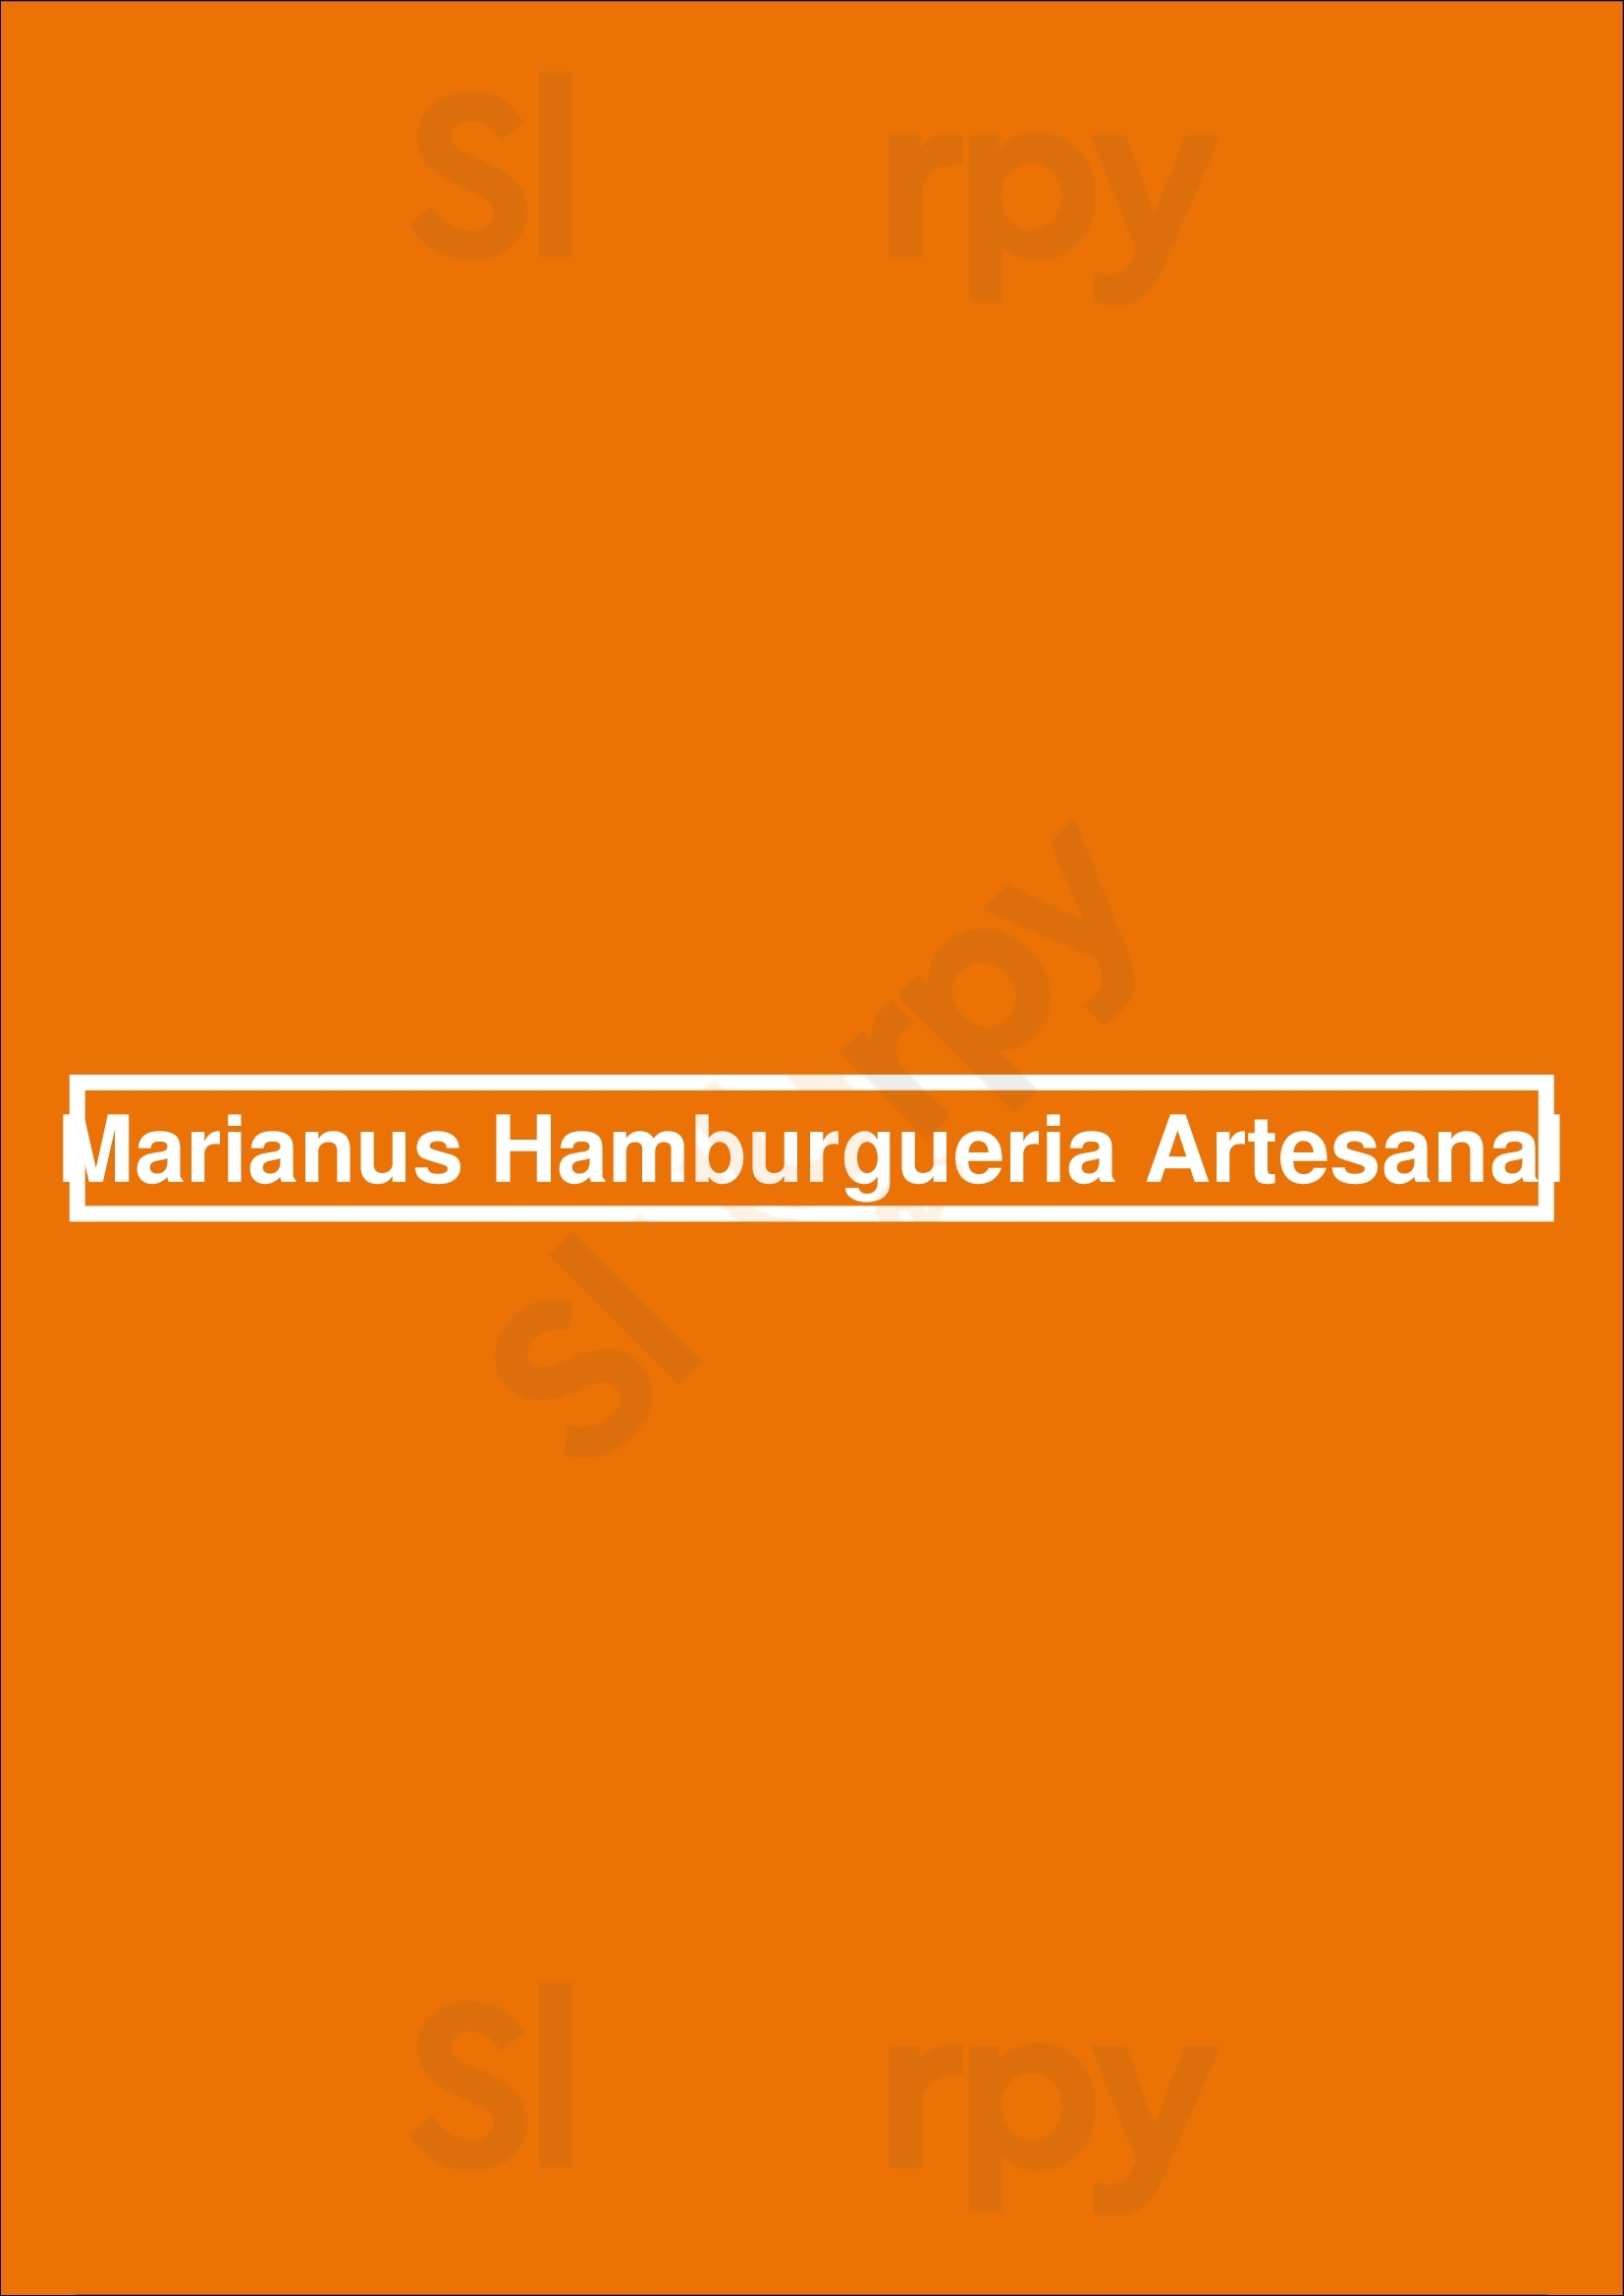 Marianus Hamburgueria Artesanal Porto Menu - 1